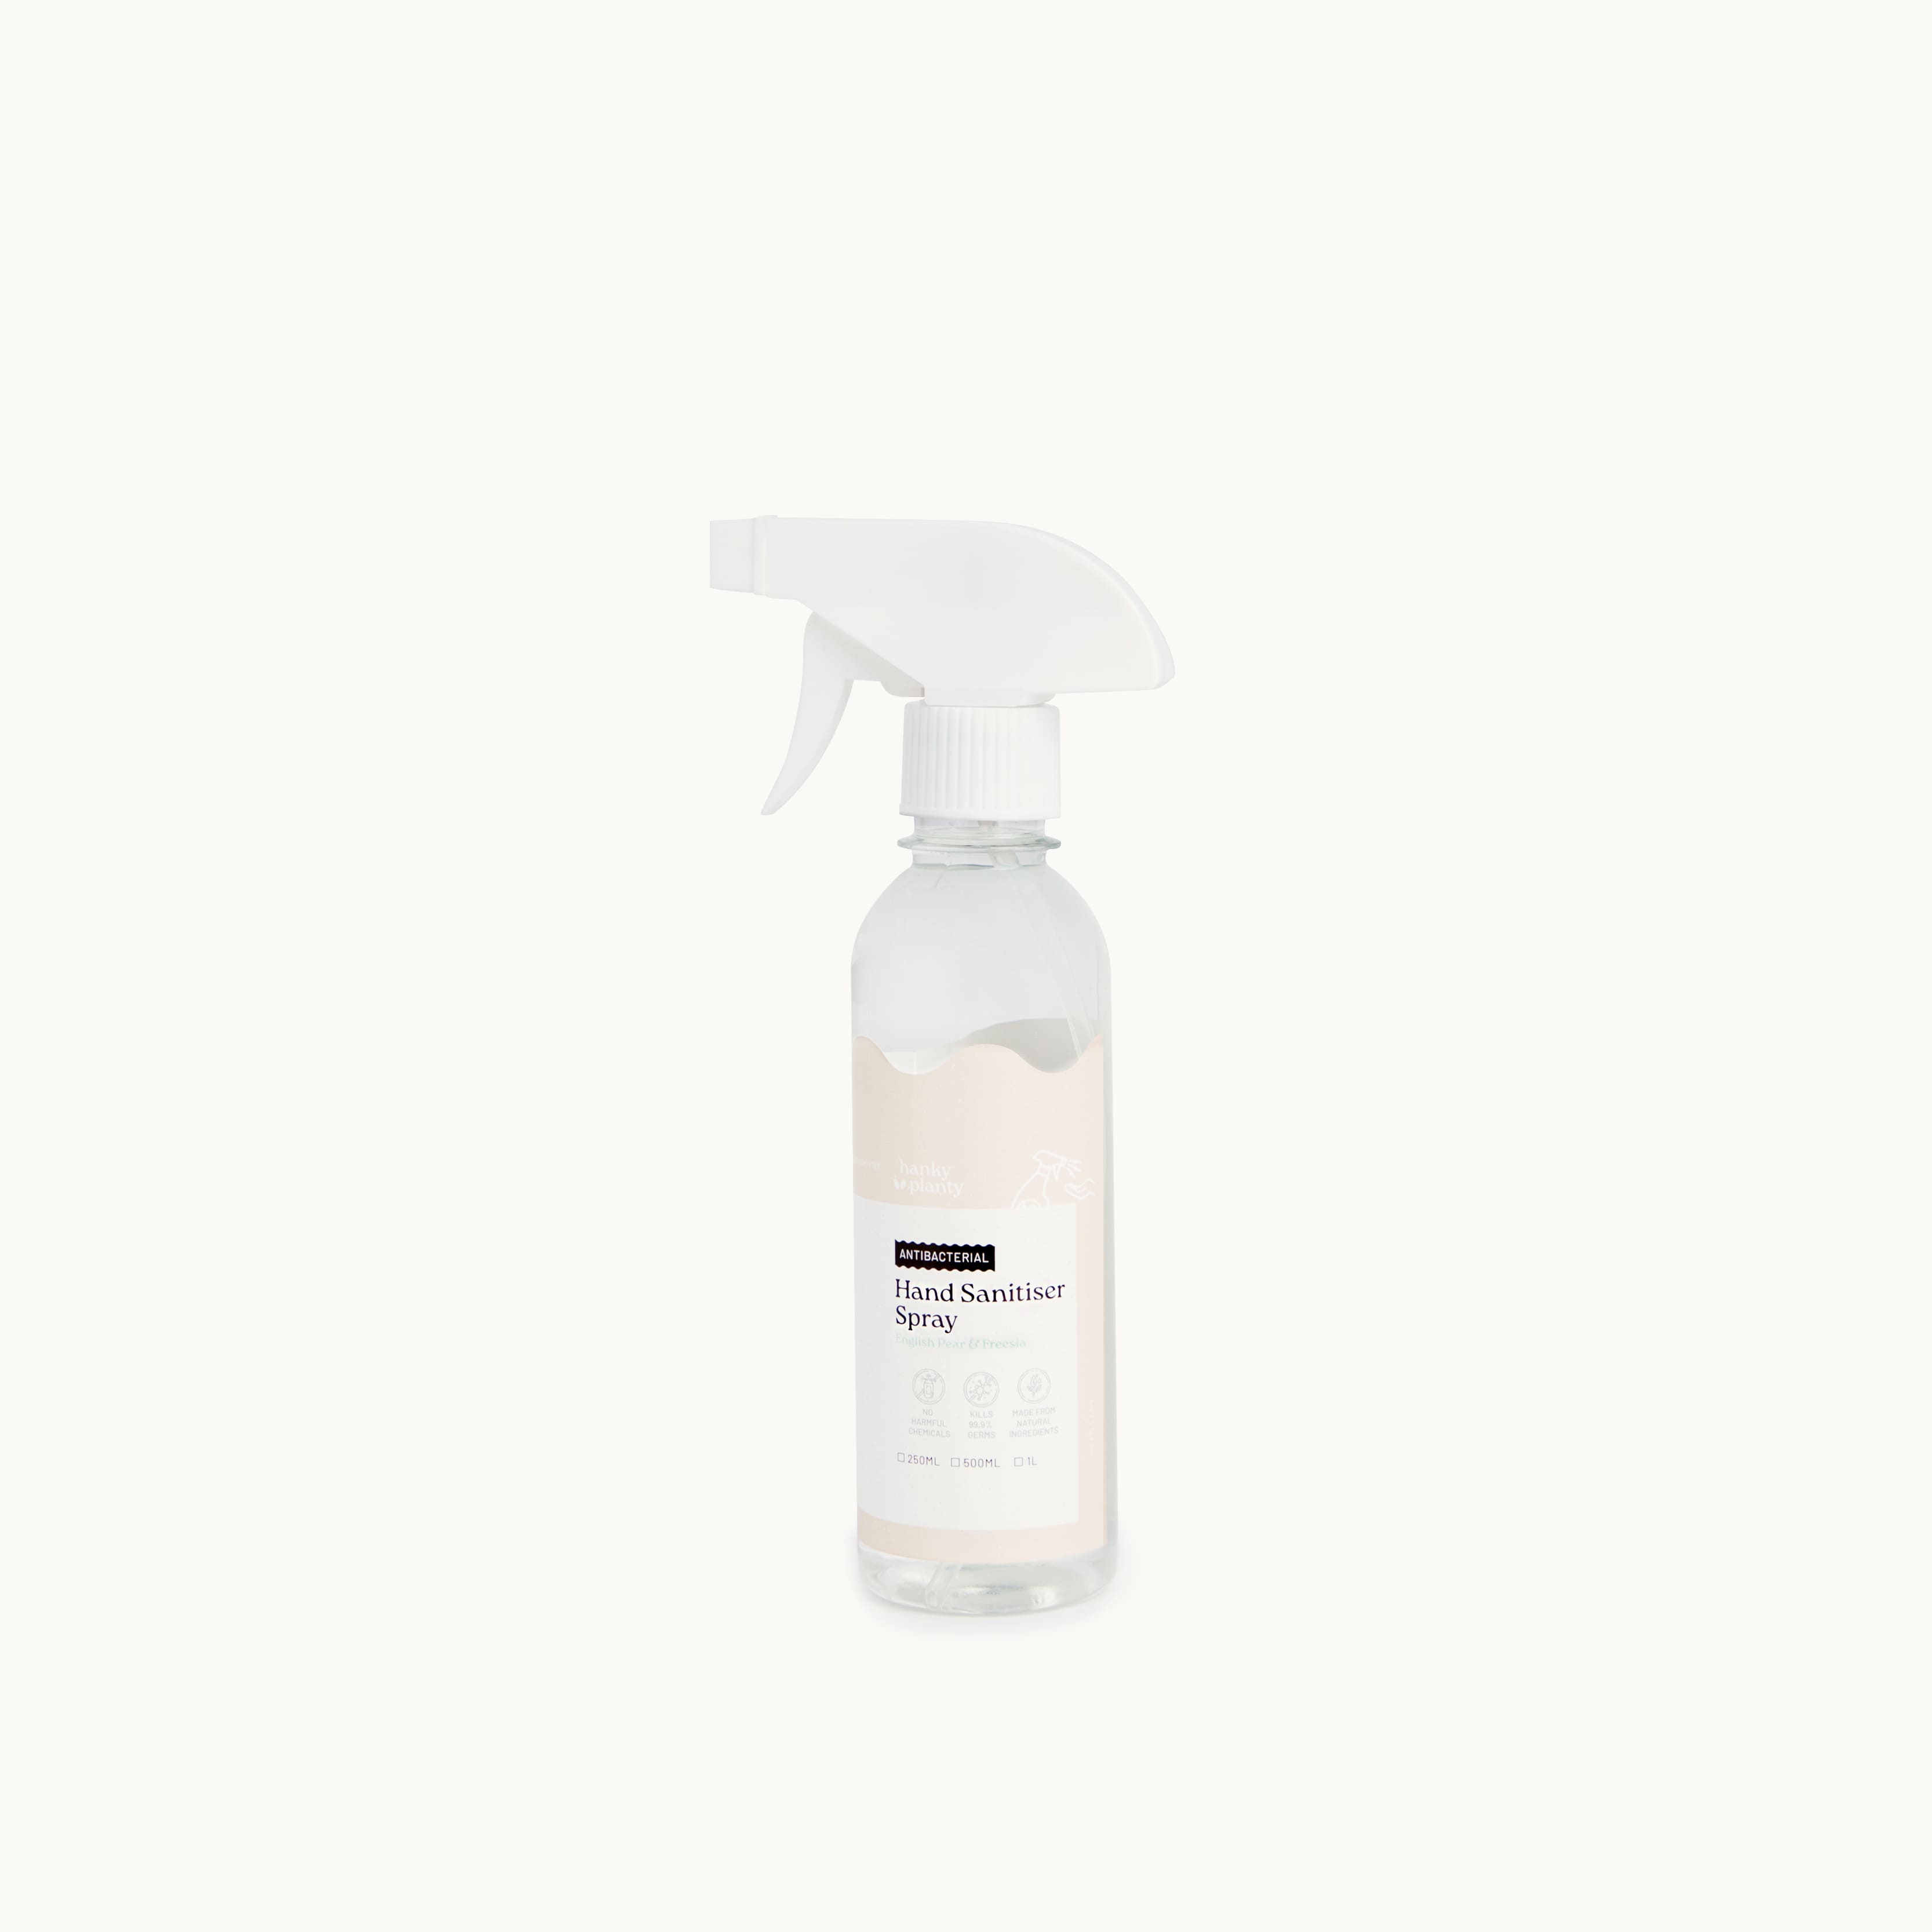 Hand Sanitizer Spray - English Pear & Freesia